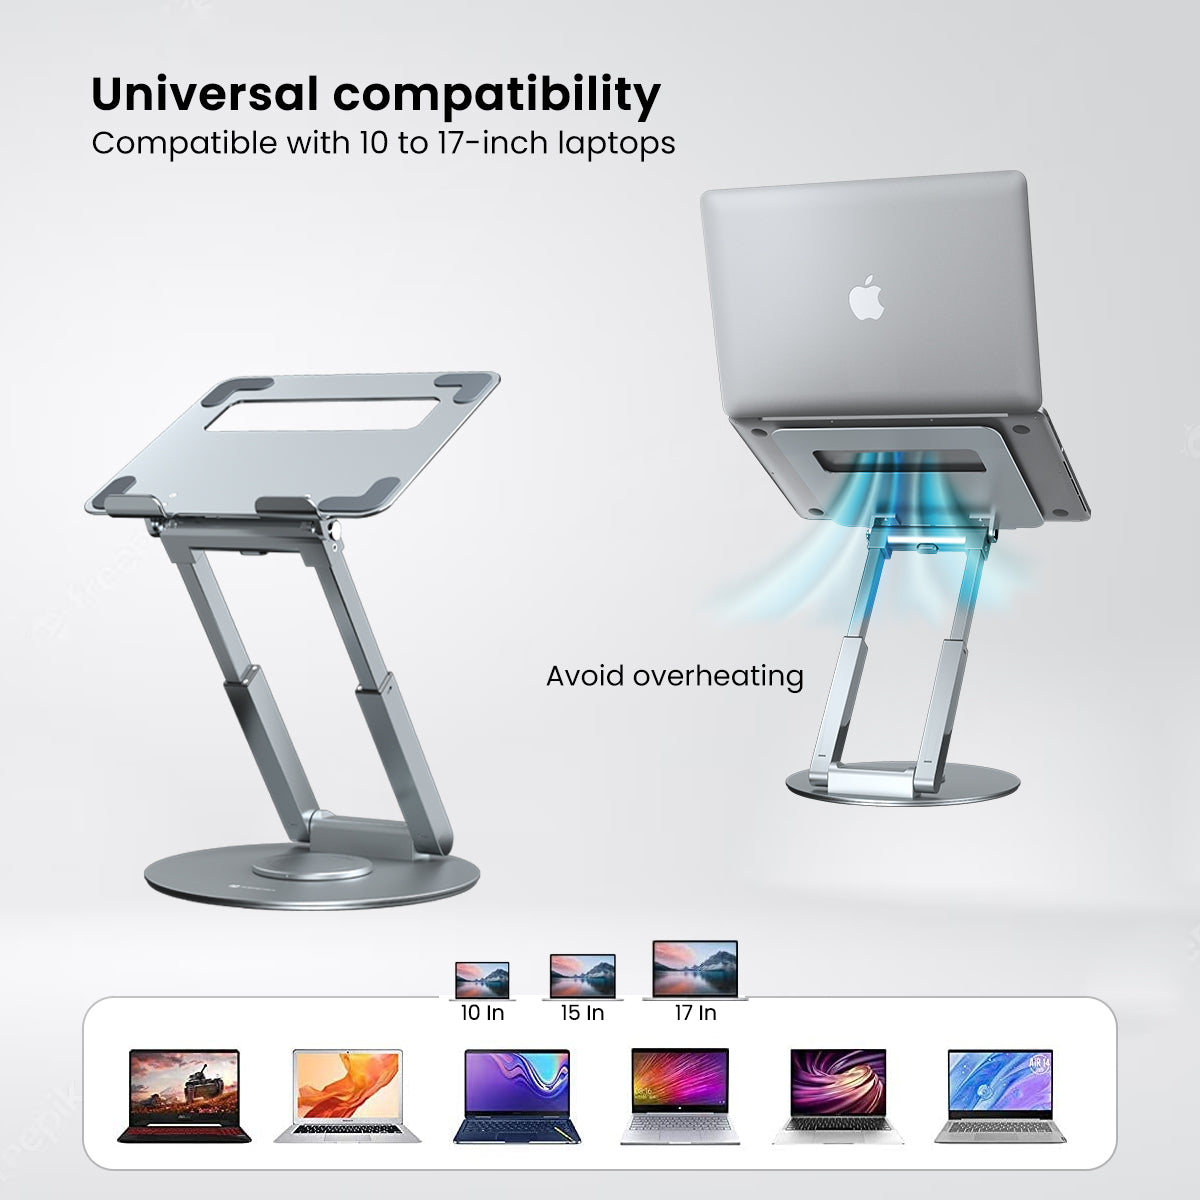 Portronics universal compatibility flexible laptop stand. Silver